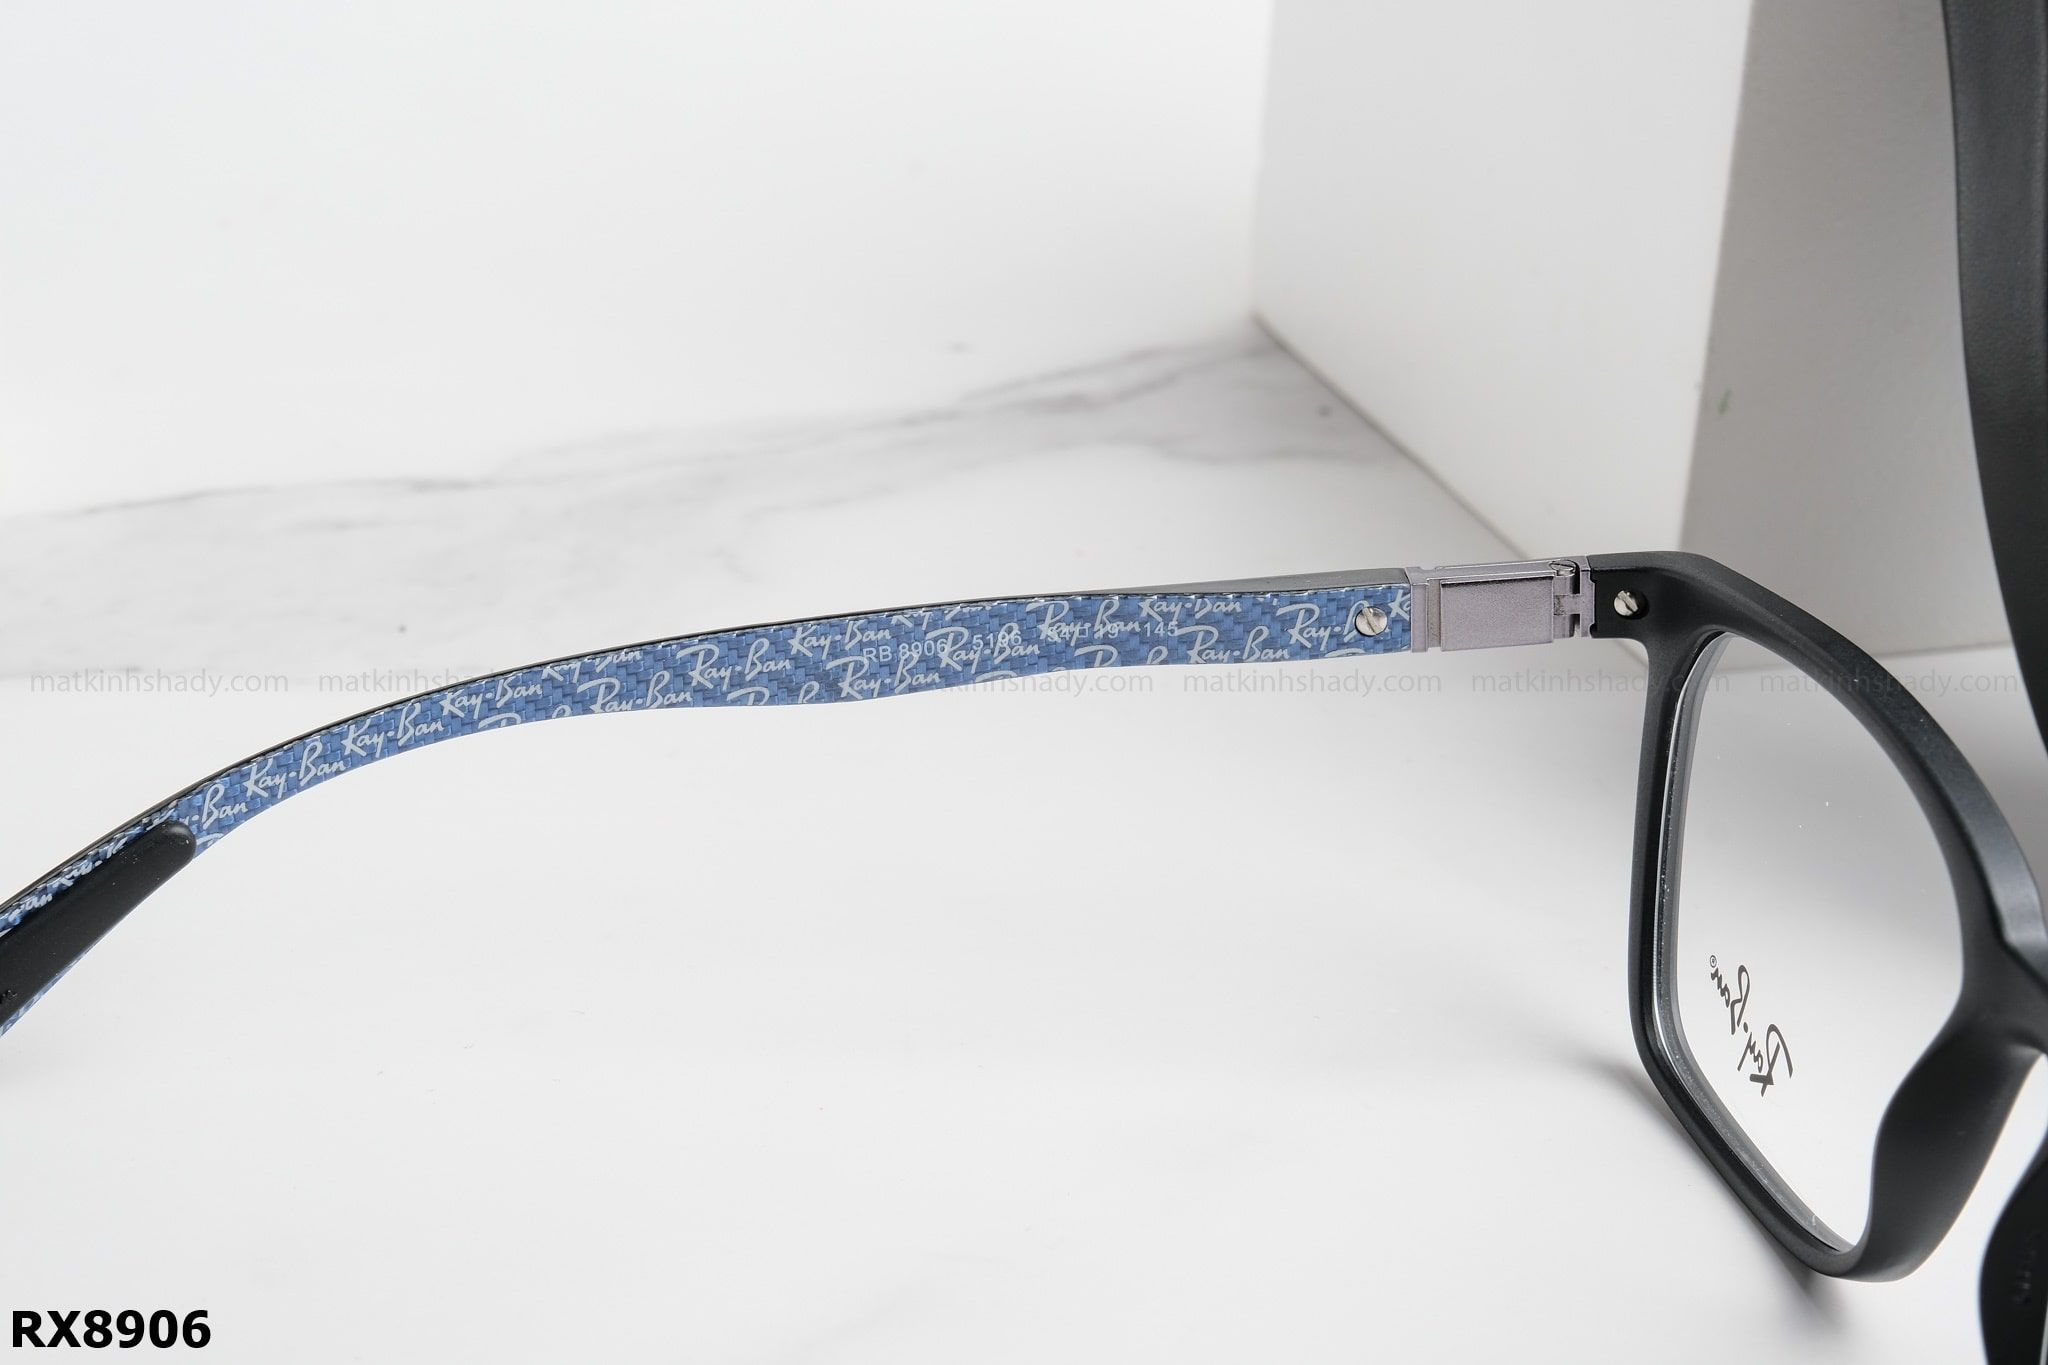  Rayban Eyewear - Glasses - RX8906 